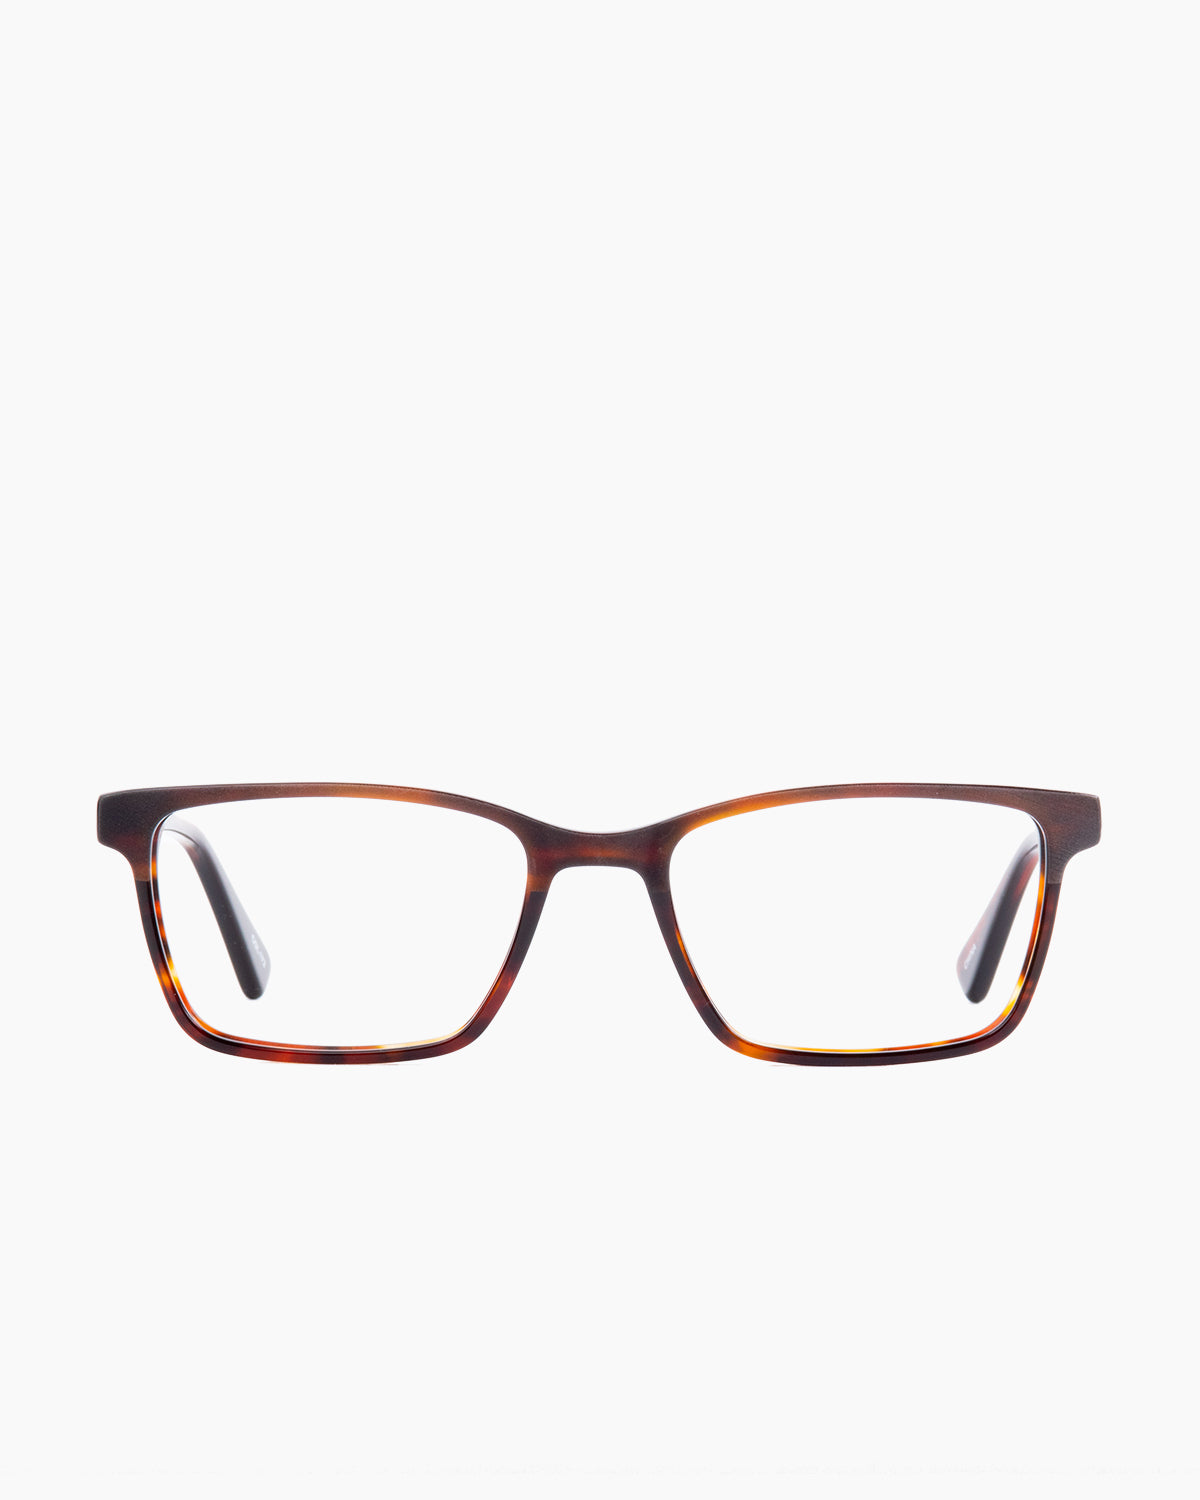 Evolve - Garfield - 172 | Bar à lunettes:  Marie-Sophie Dion